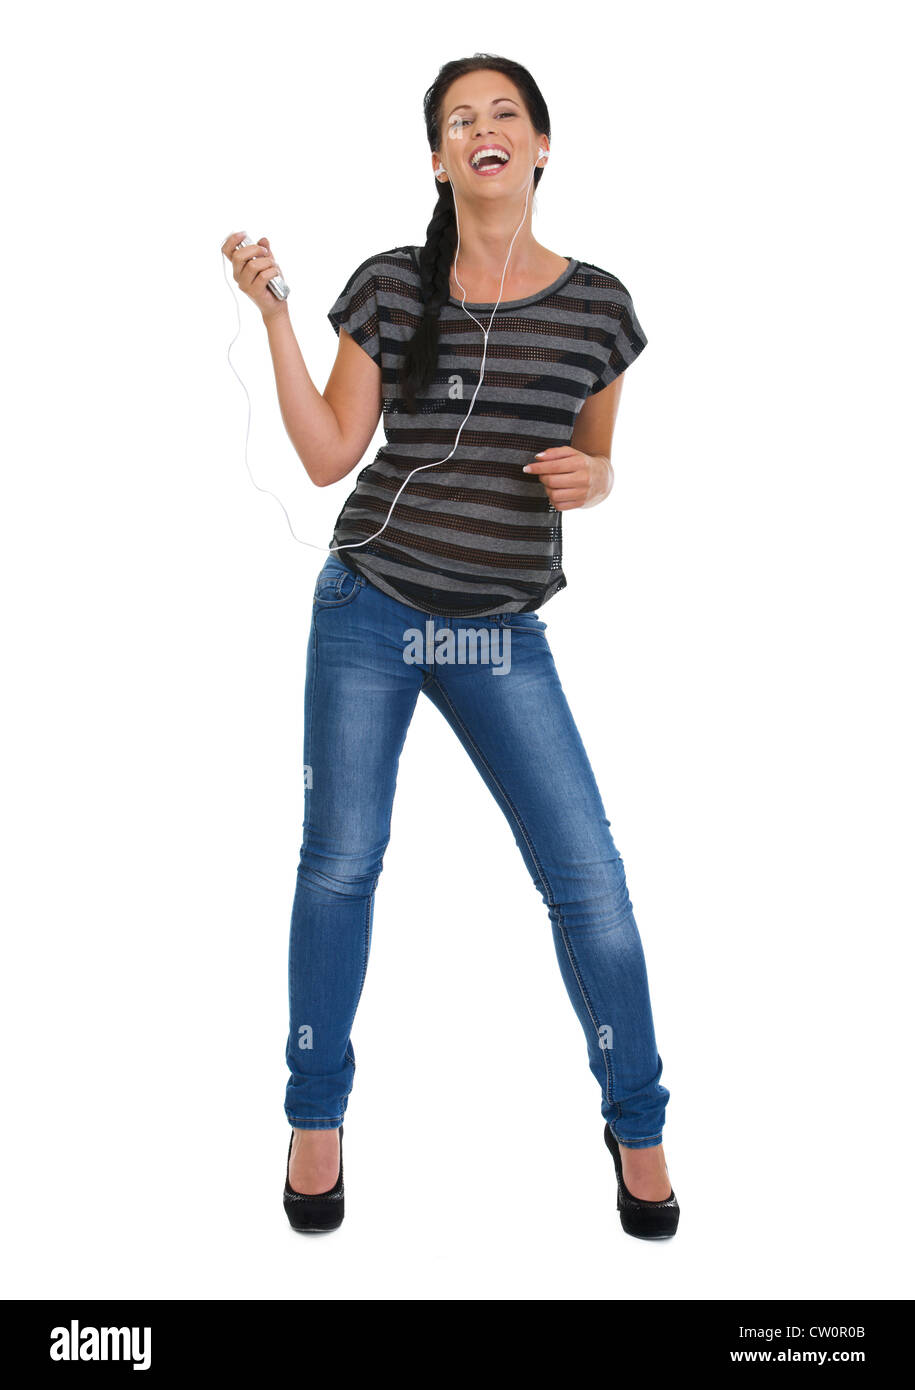 Full length portrait of happy girl with headphones dancing Stock Photo